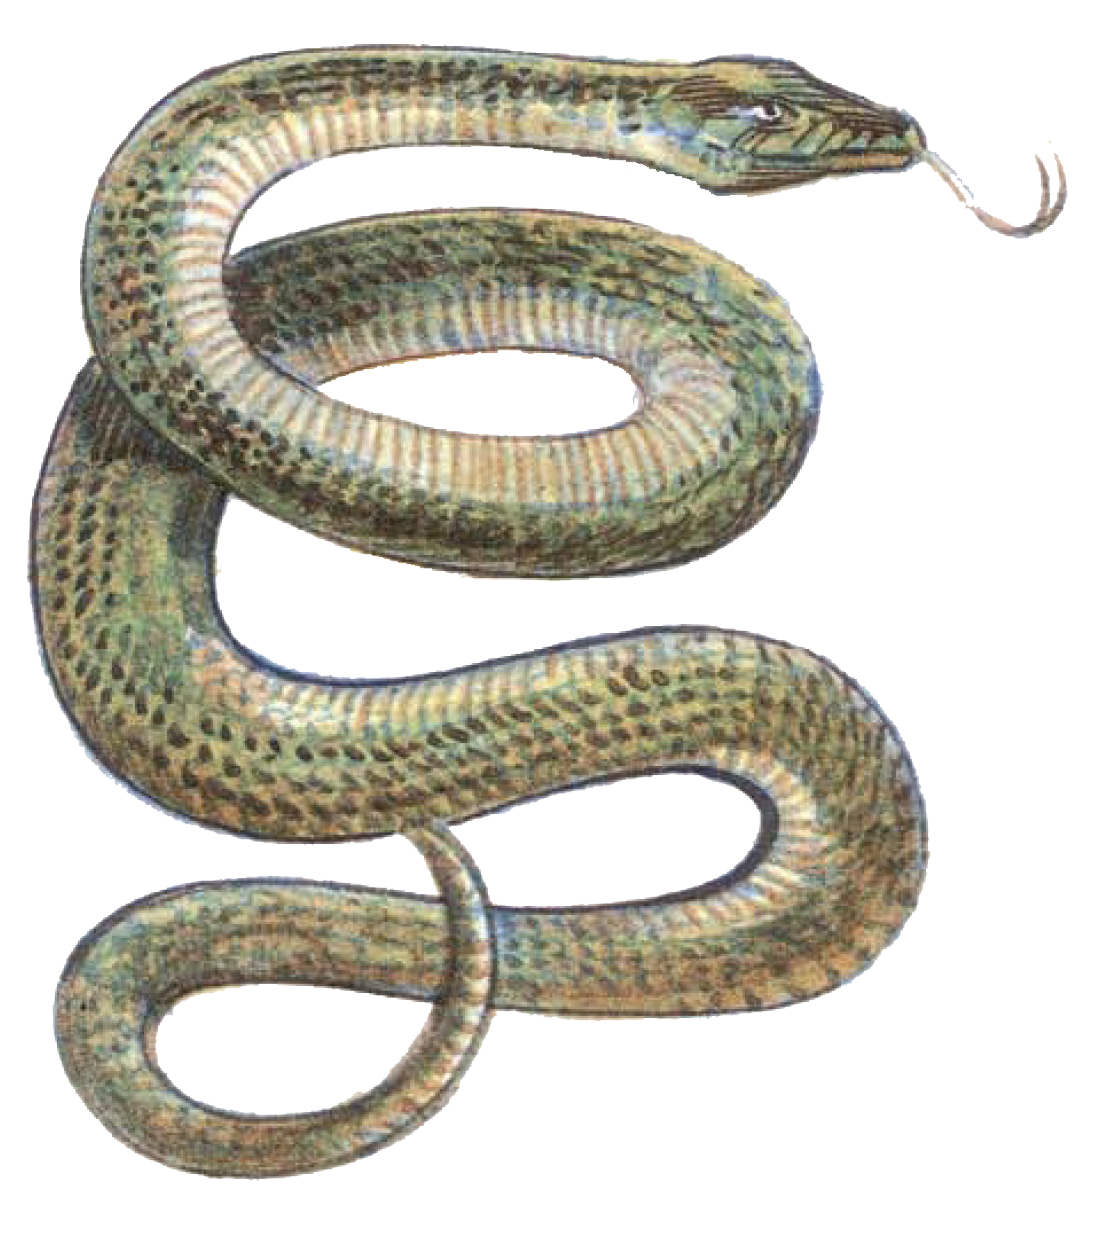 constrictor-snake-forgotten-realms-wiki-fandom